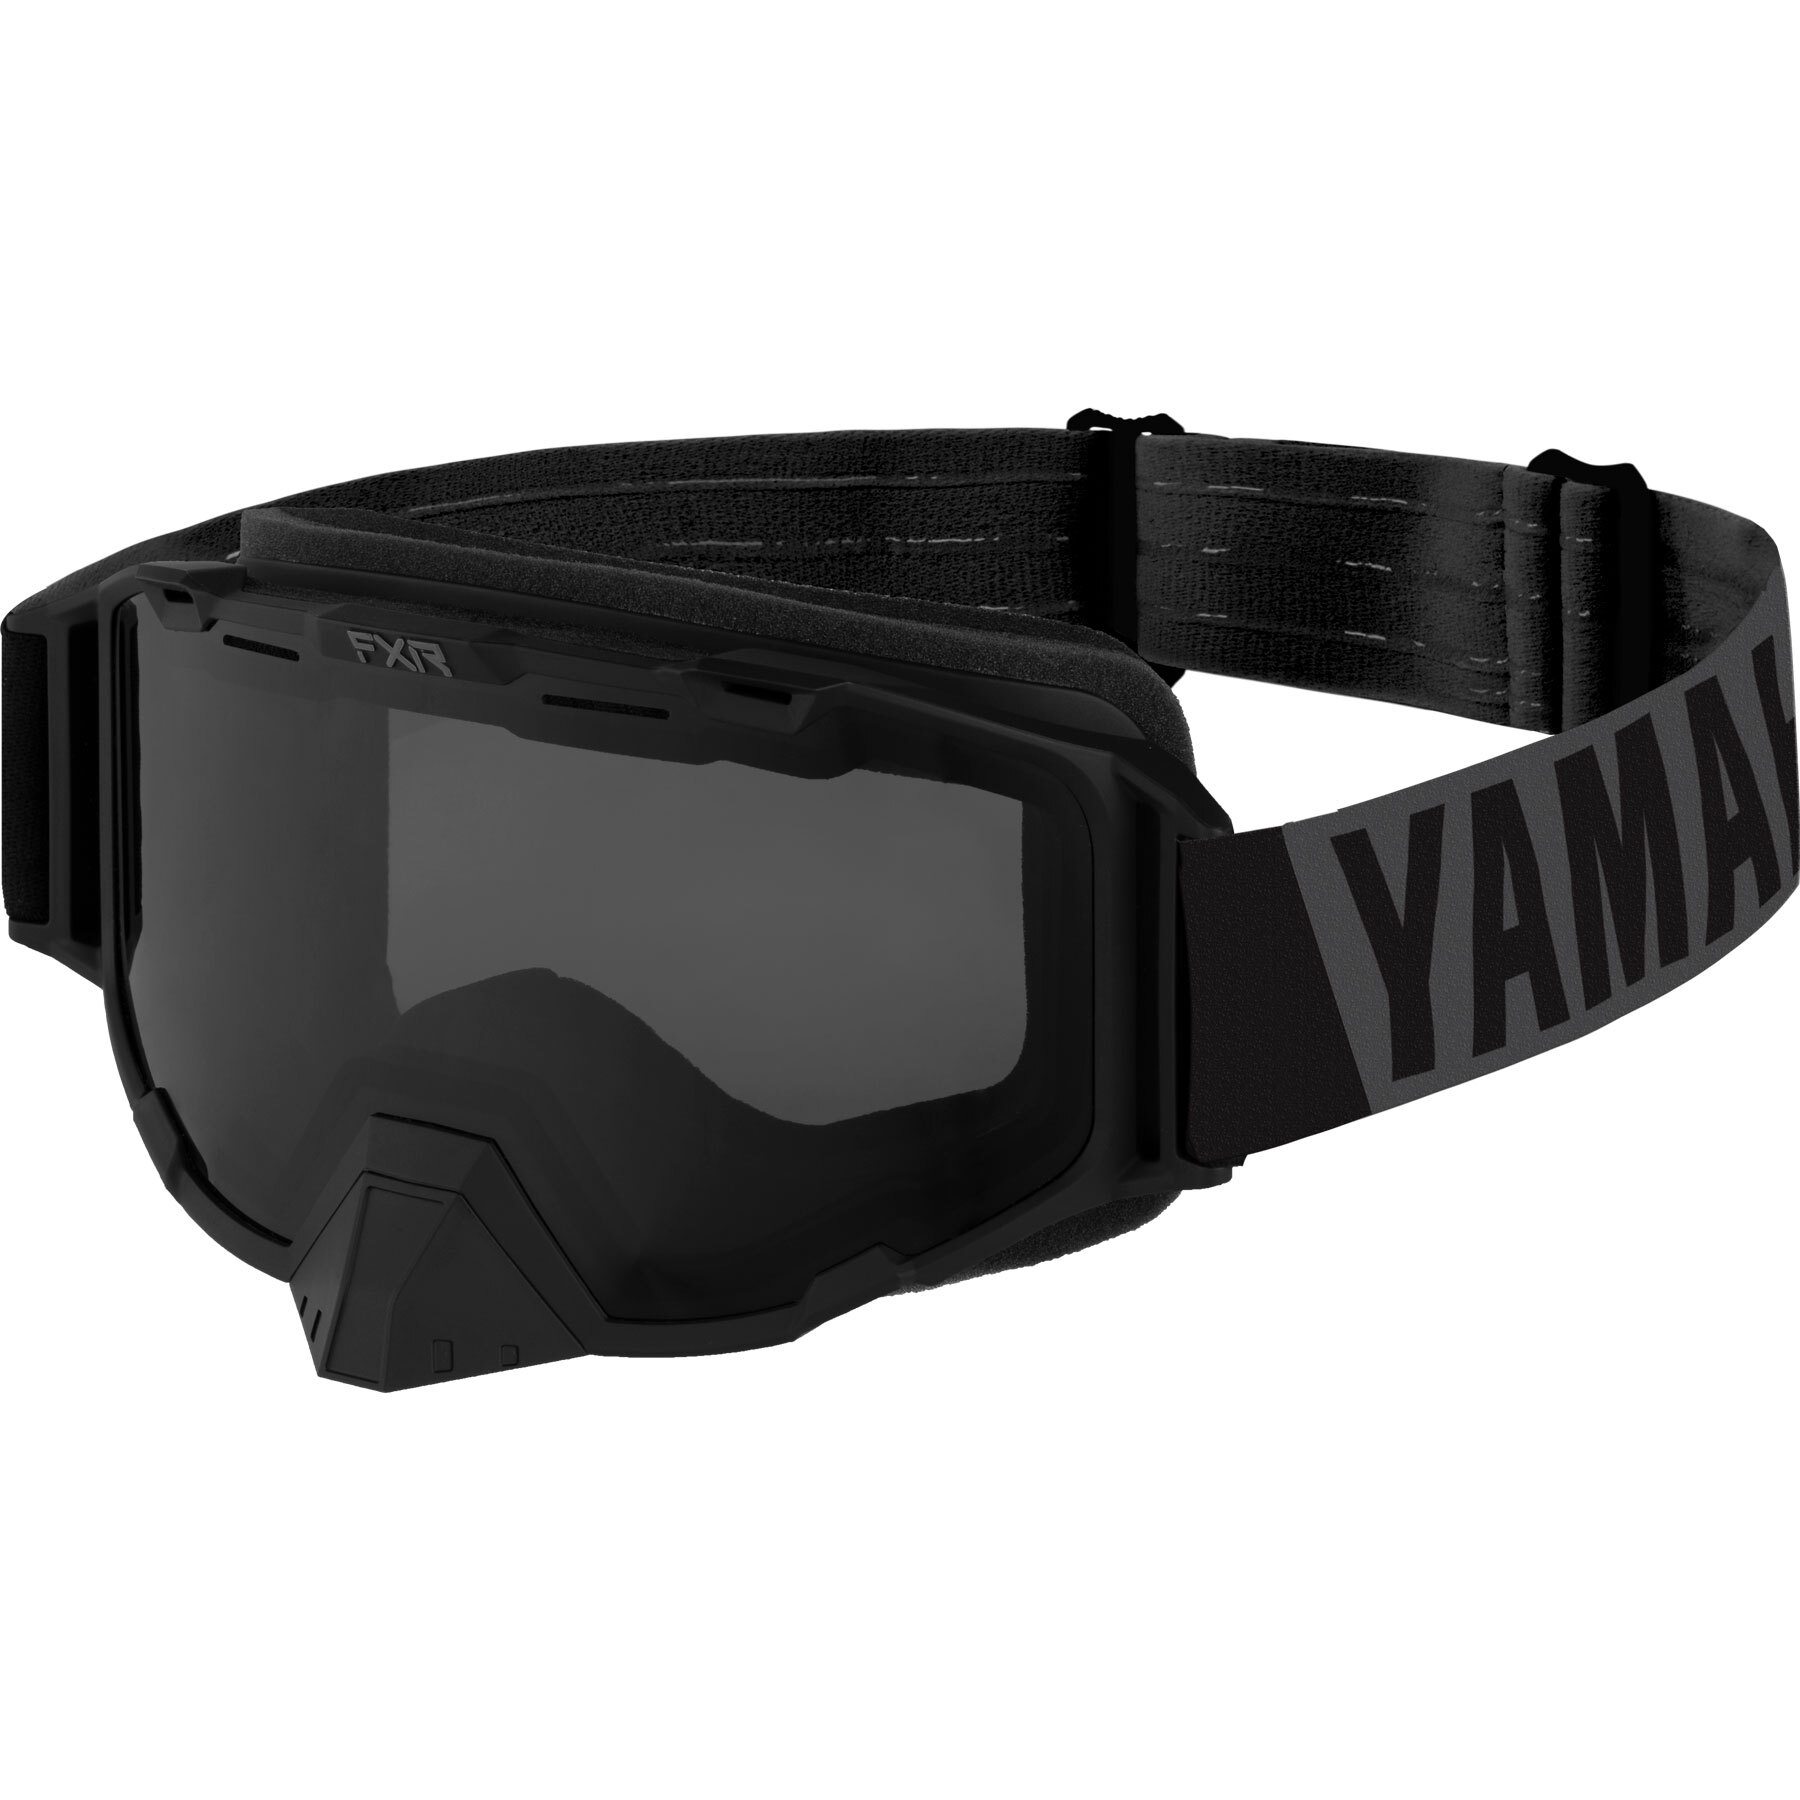 Yamaha Maverick Goggles by FXR®